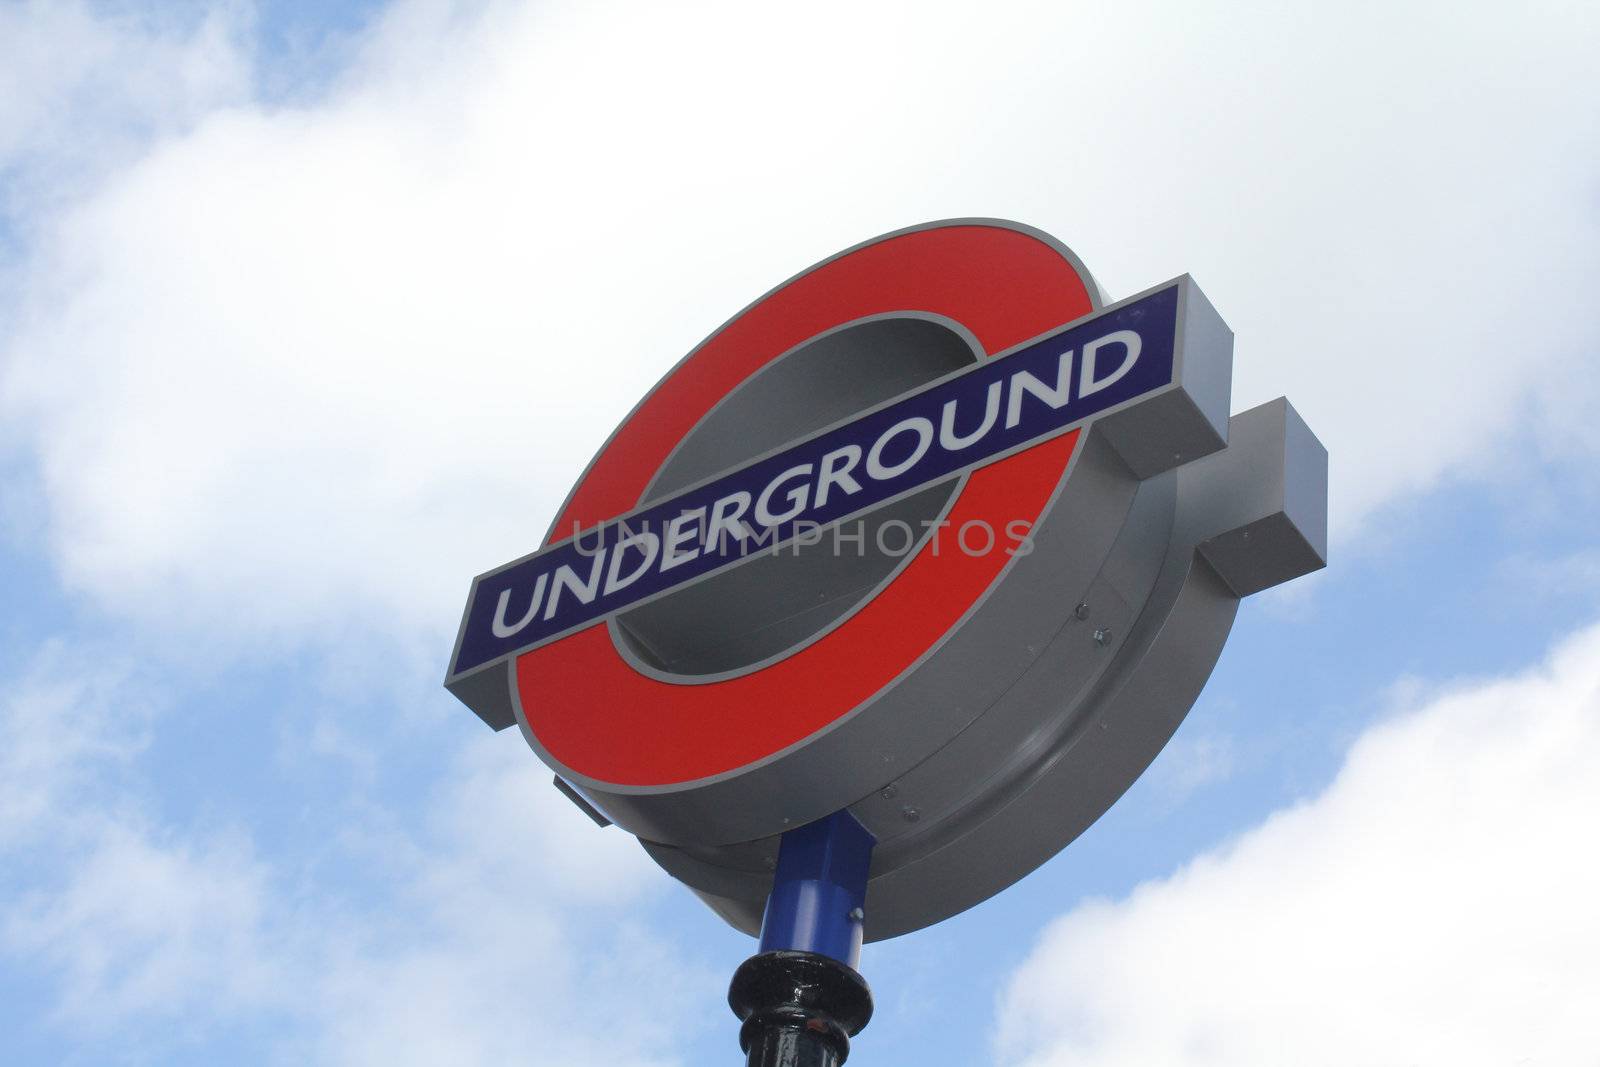 london underground sign by keki